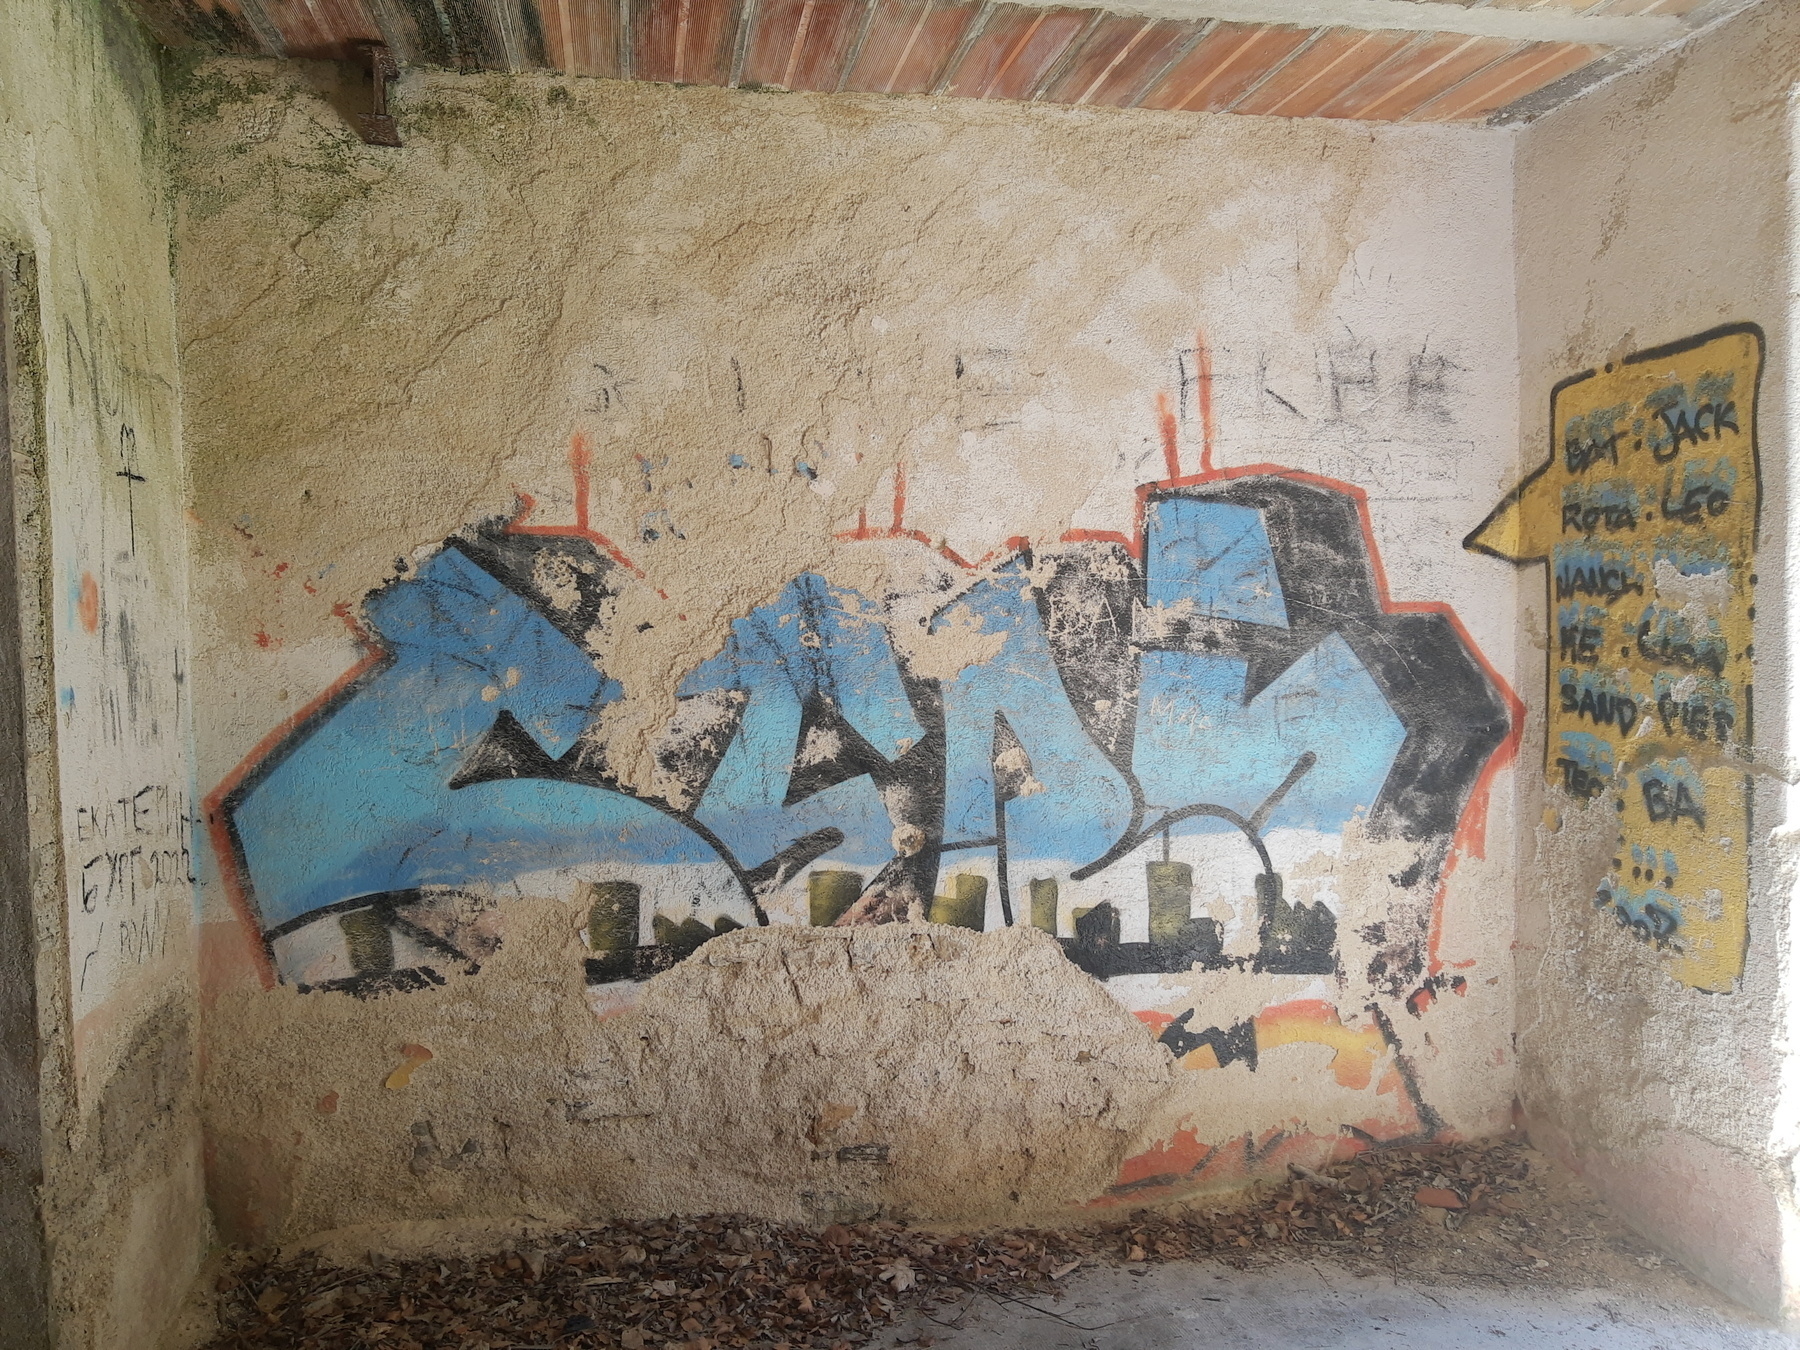 Old graffiti